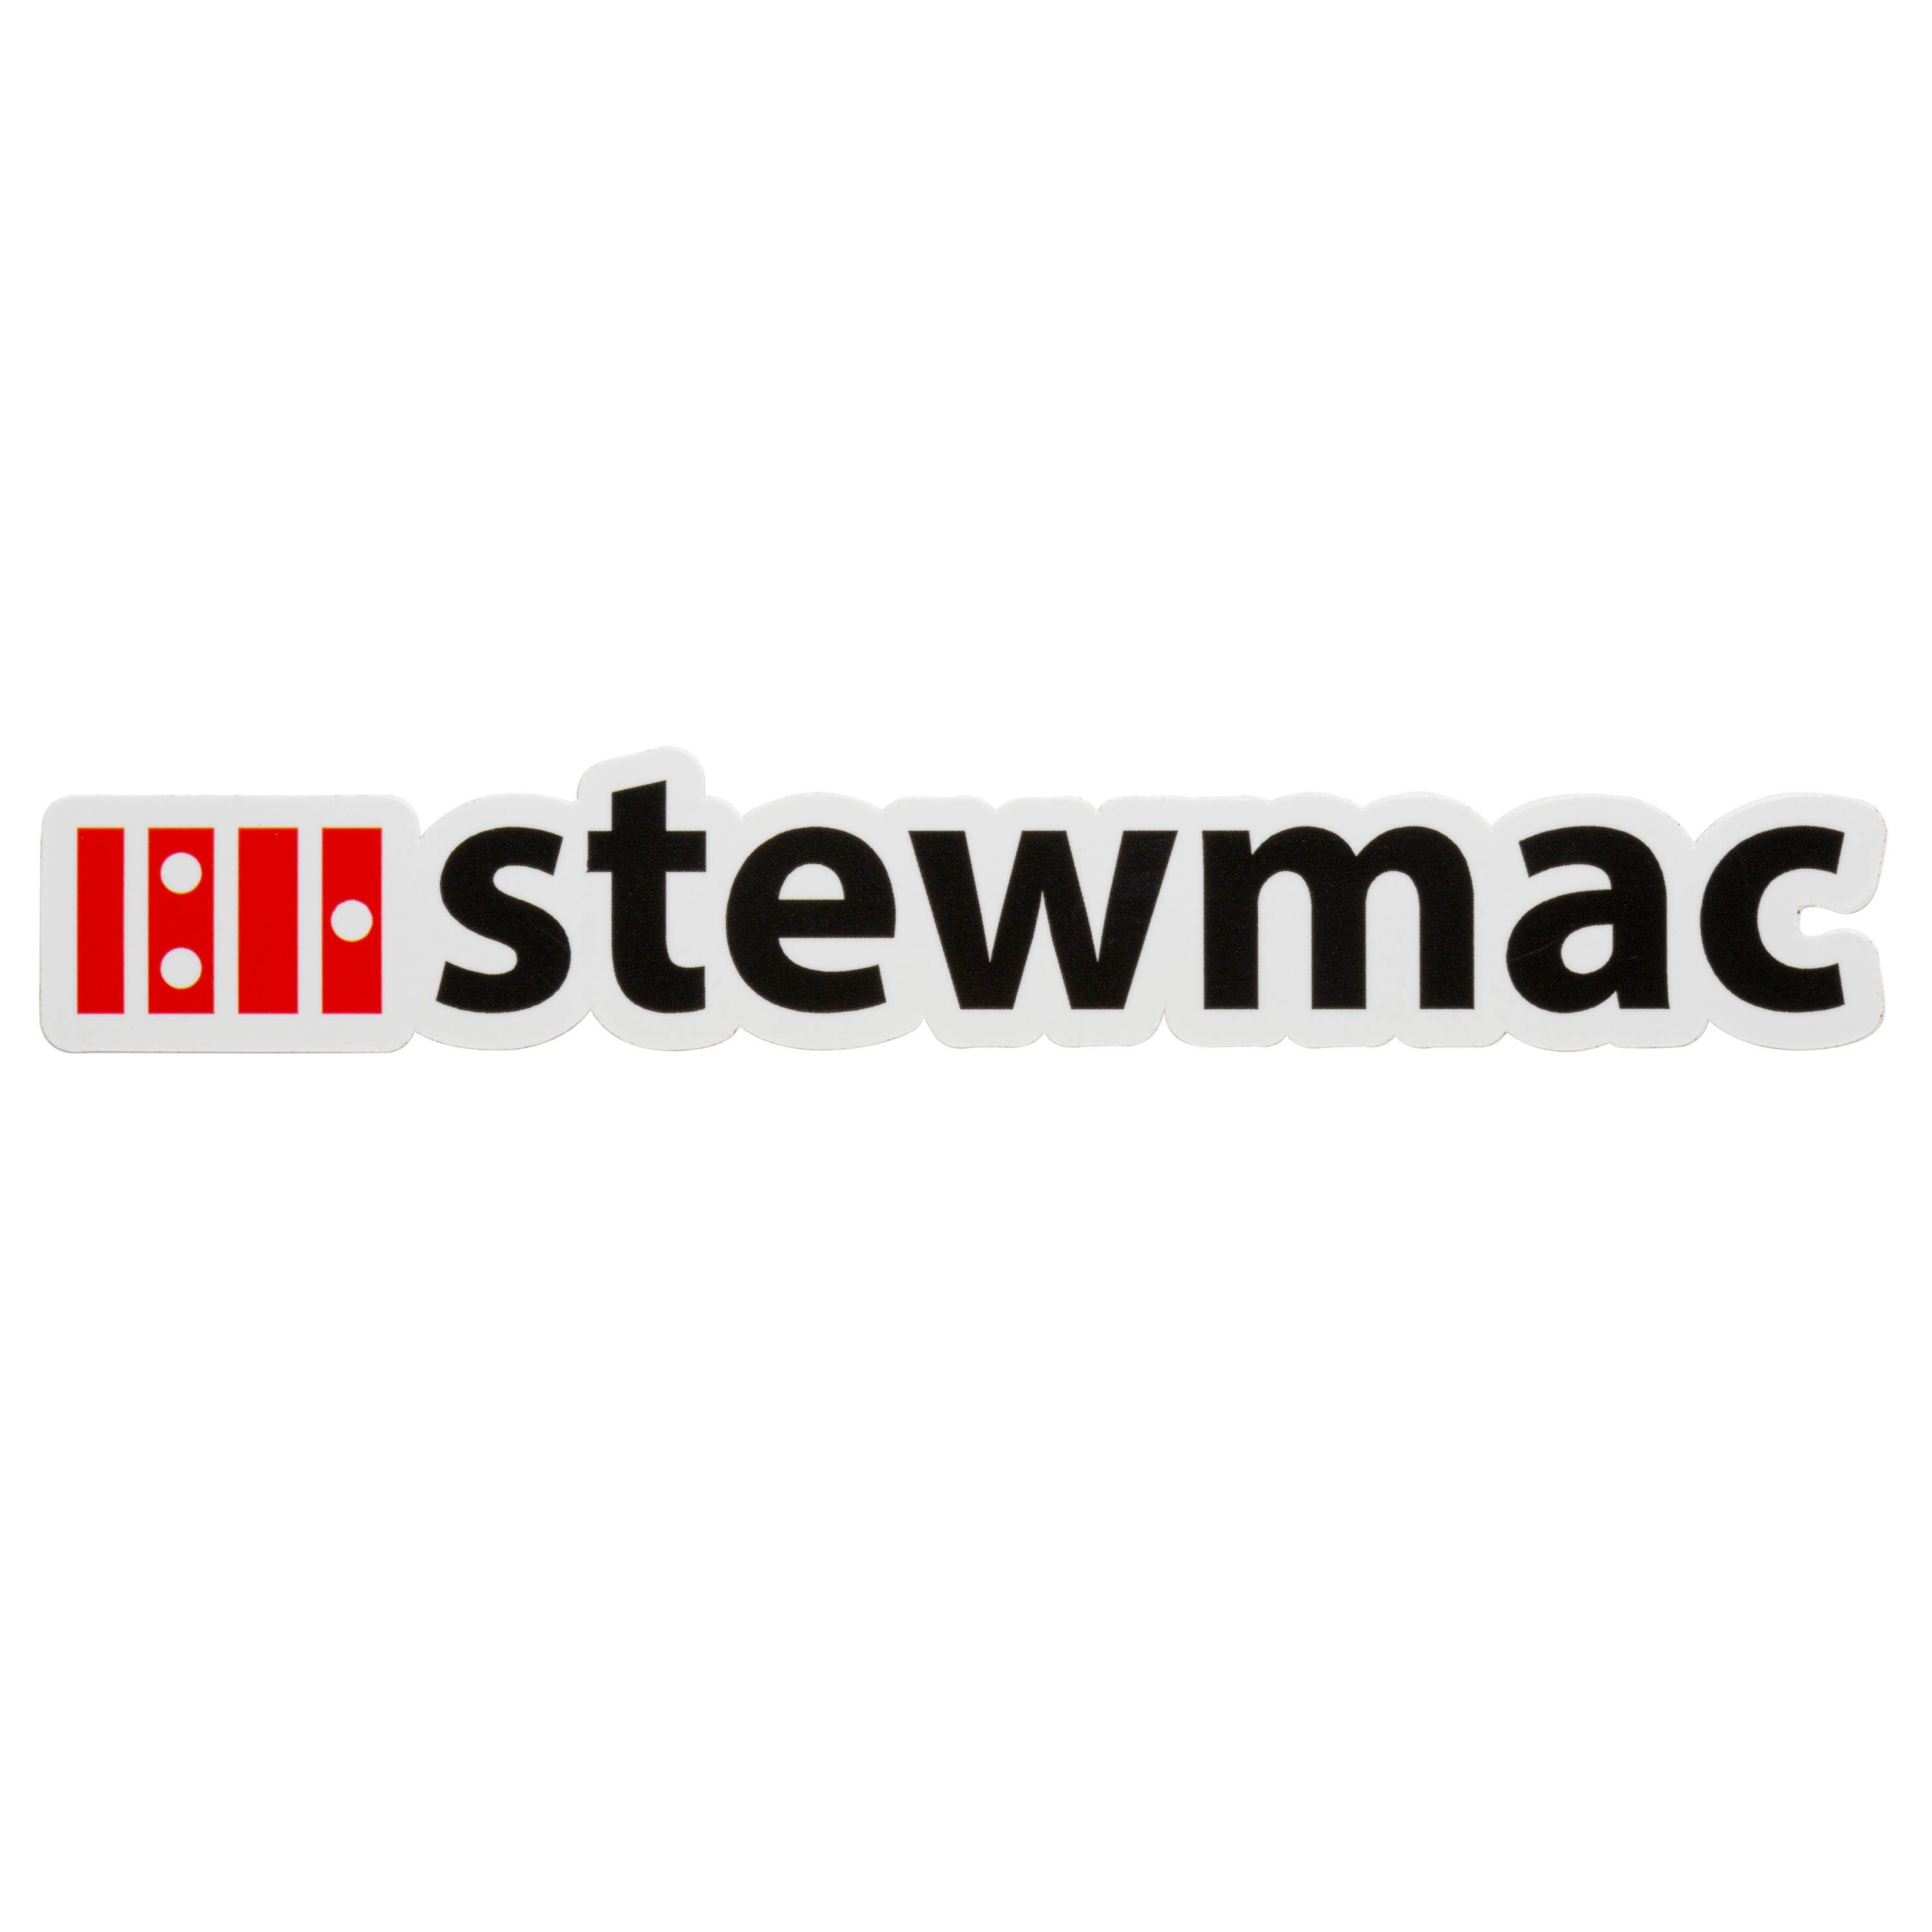 StewMac Stickers